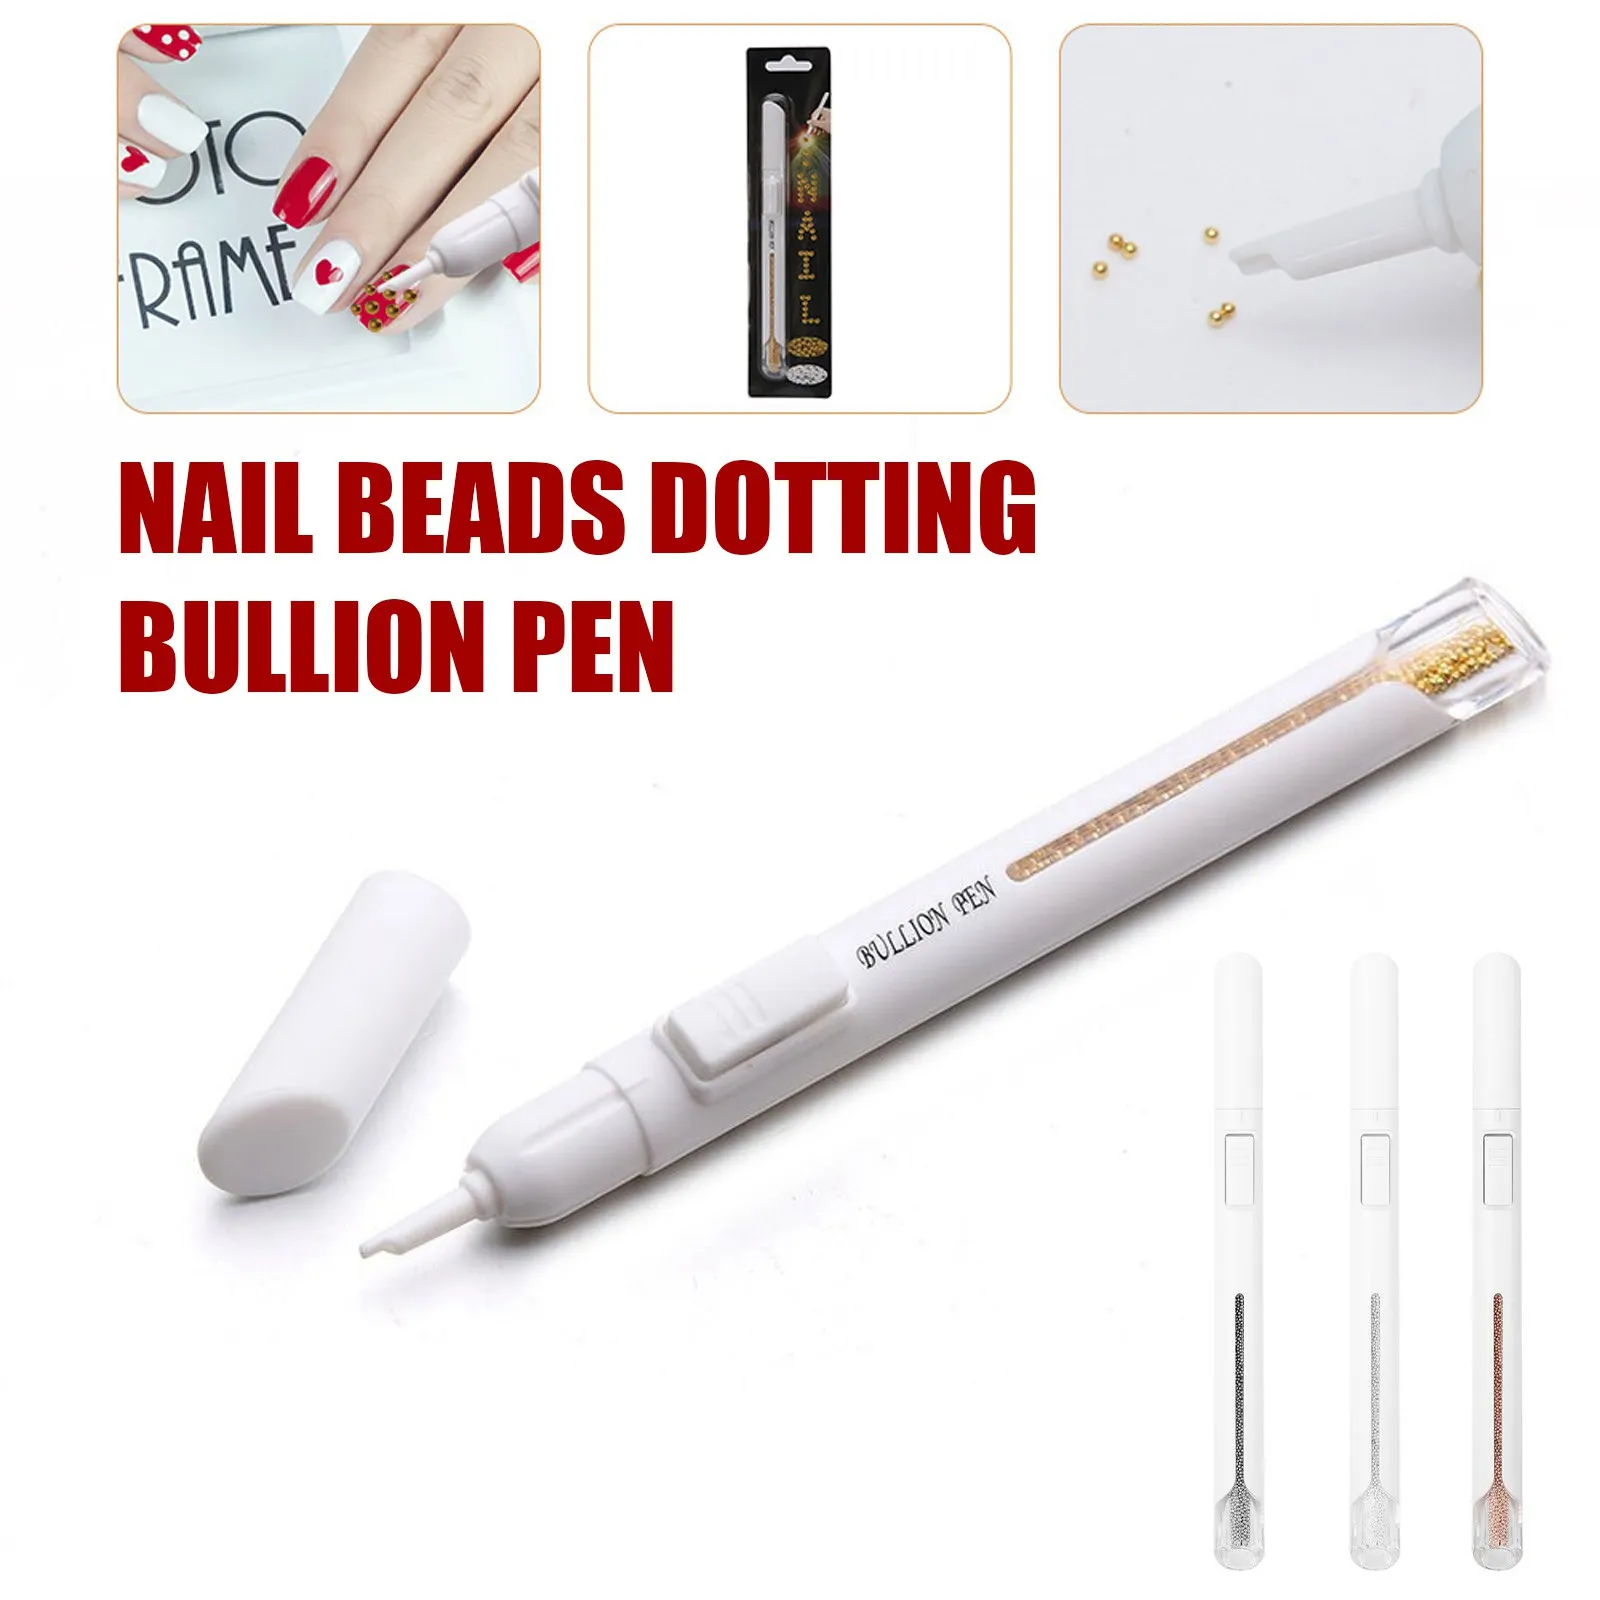 

0.8mm Steel Beads Picking Dotting Pen Nail Art Tool Pick Up Small Ball Caviar Manicure Accessory Nail Painting Bullion Pen